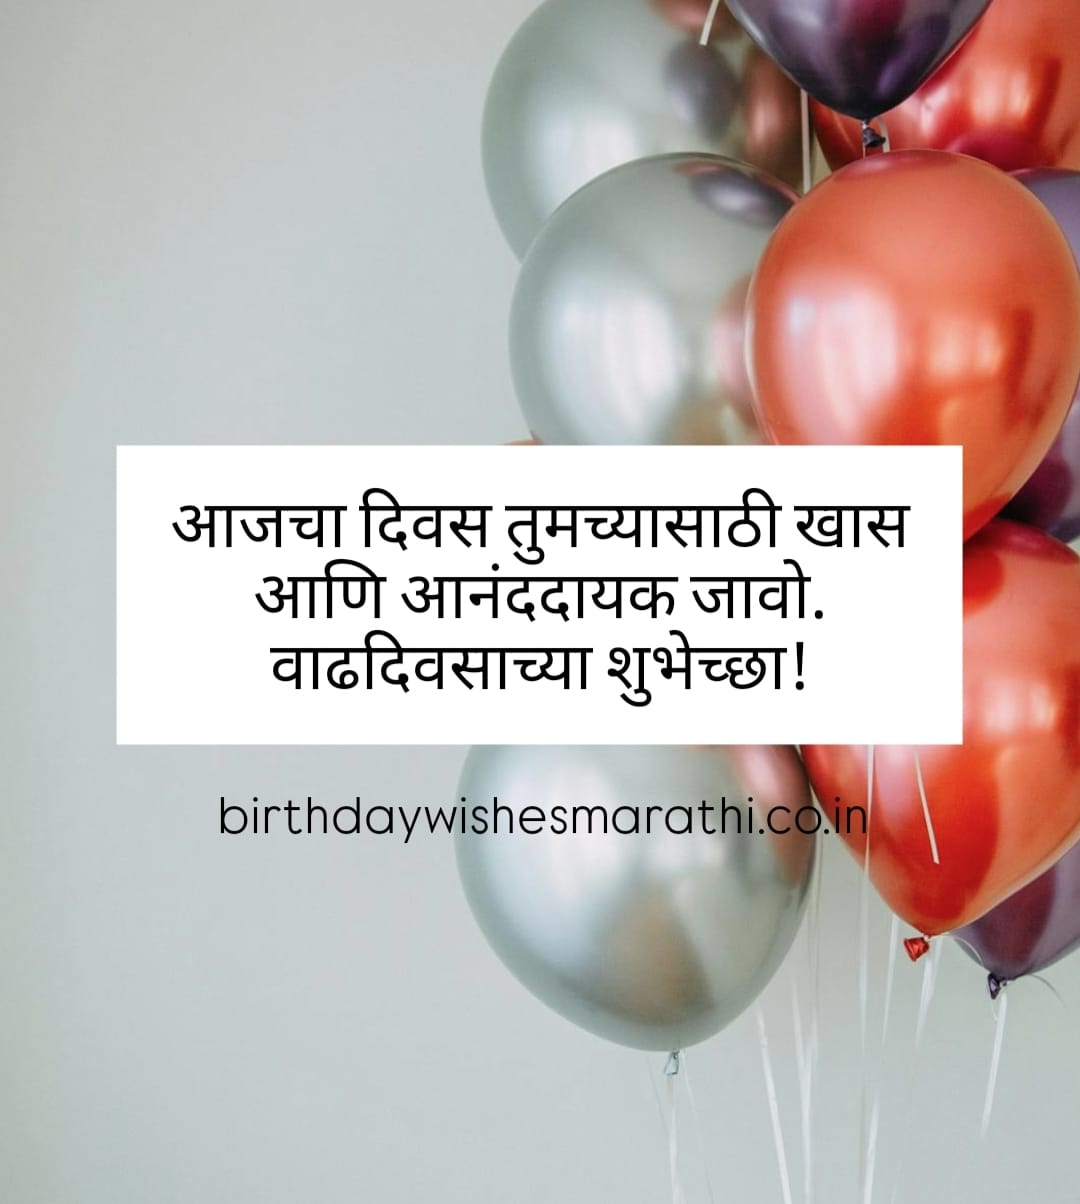 Birth Day Wishes in Marathi